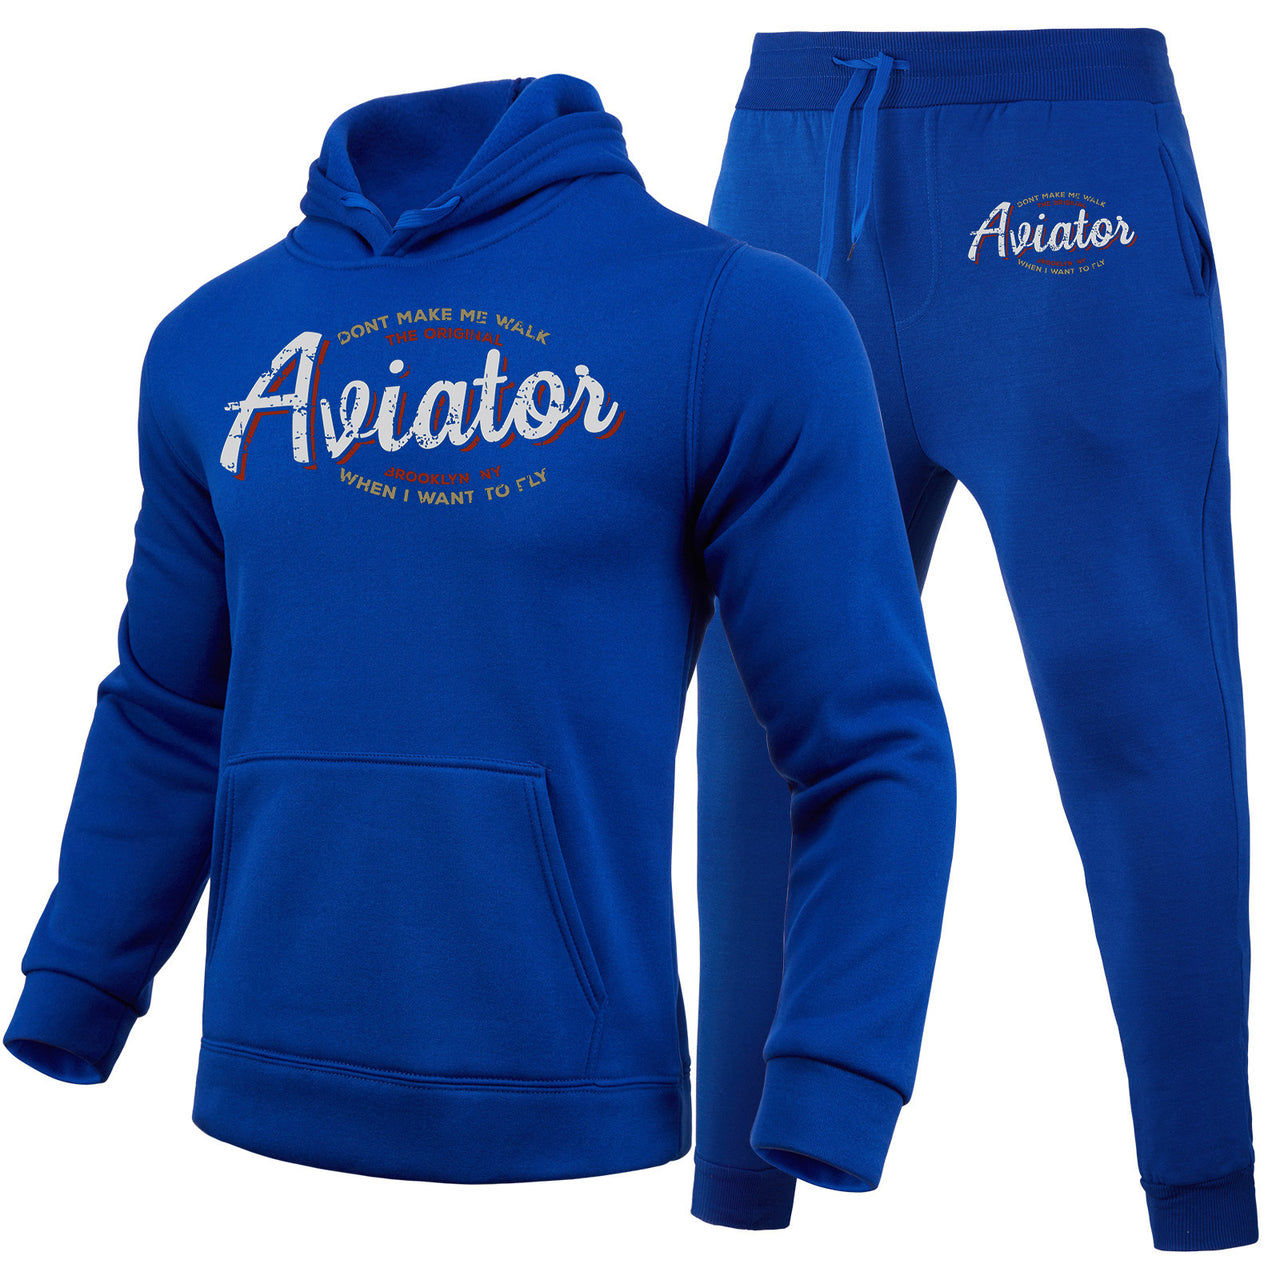 Aviator - Dont Make Me Walk Designed Hoodies & Sweatpants Set